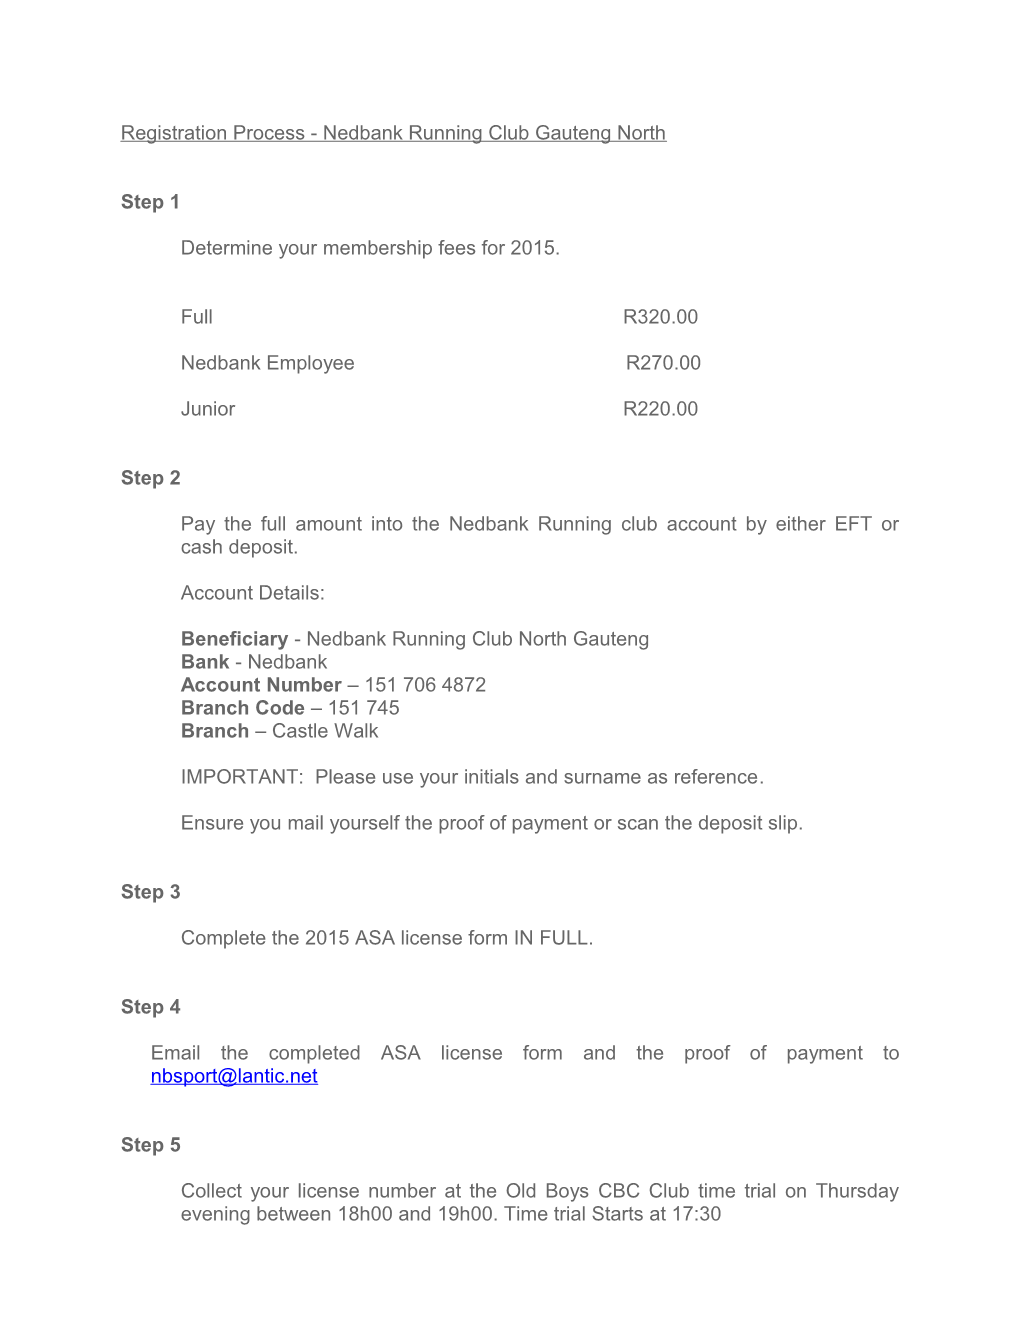 Registration Process - Nedbank Running Club Central Gauteng